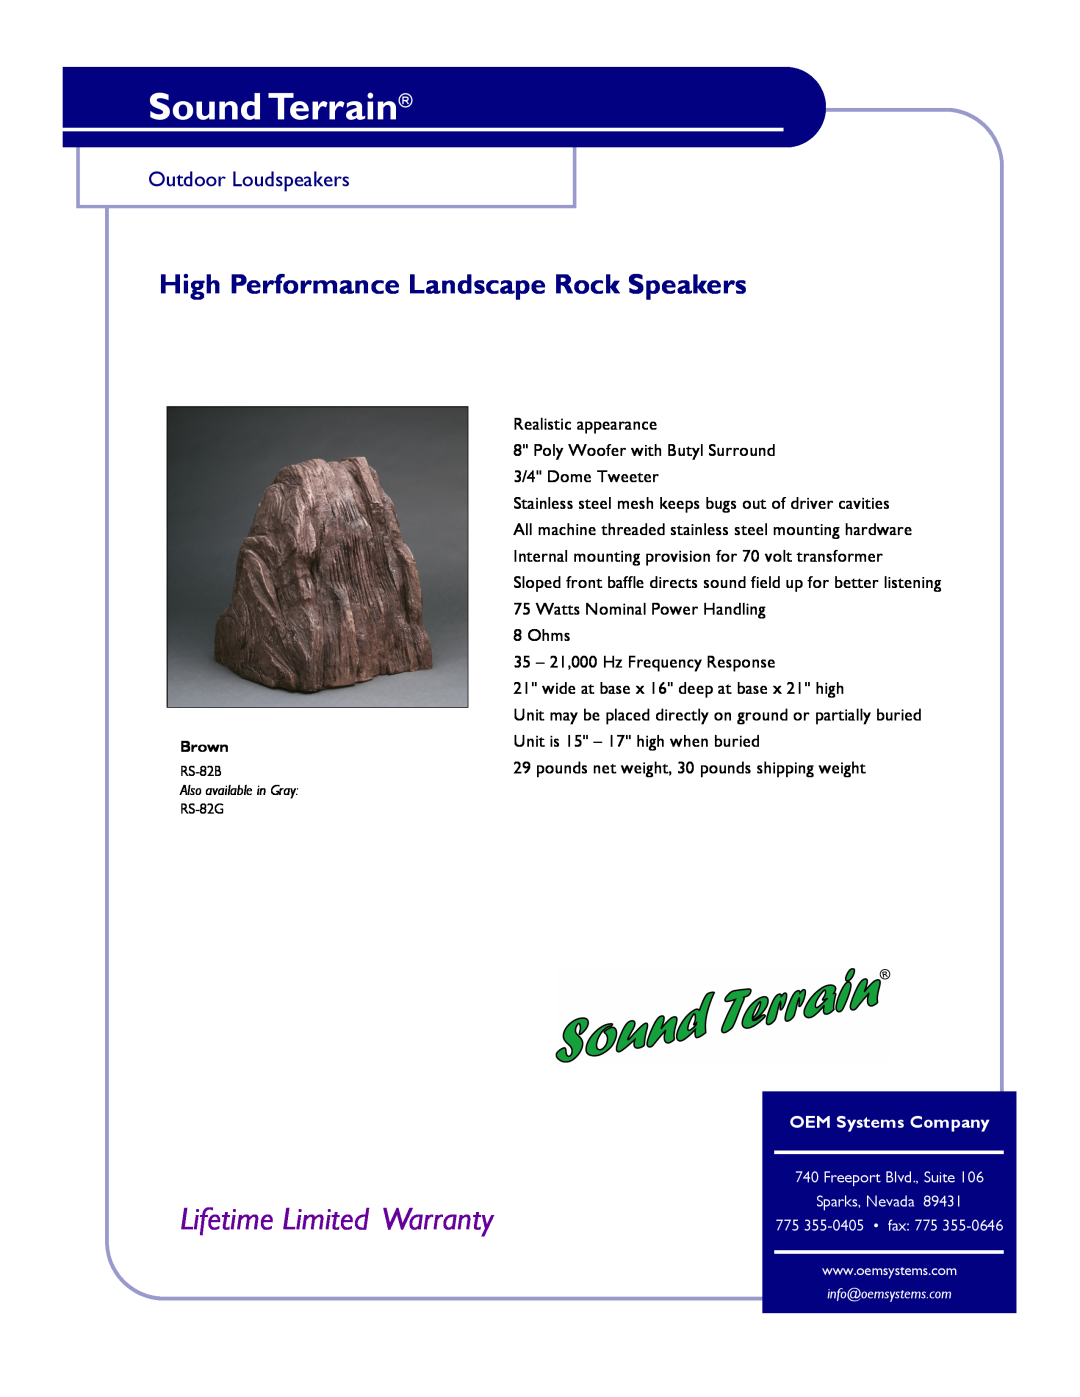 OEM Systems RS-82B, RS-82G warranty Sound Terrain, Lifetime Limited Warranty, High Performance Landscape Rock Speakers 